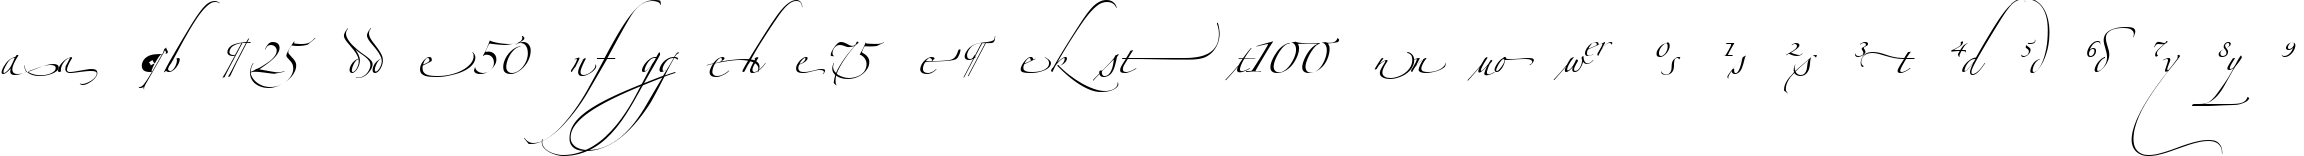 Пример написания английского алфавита шрифтом Alexandra Zeferino Ornamental